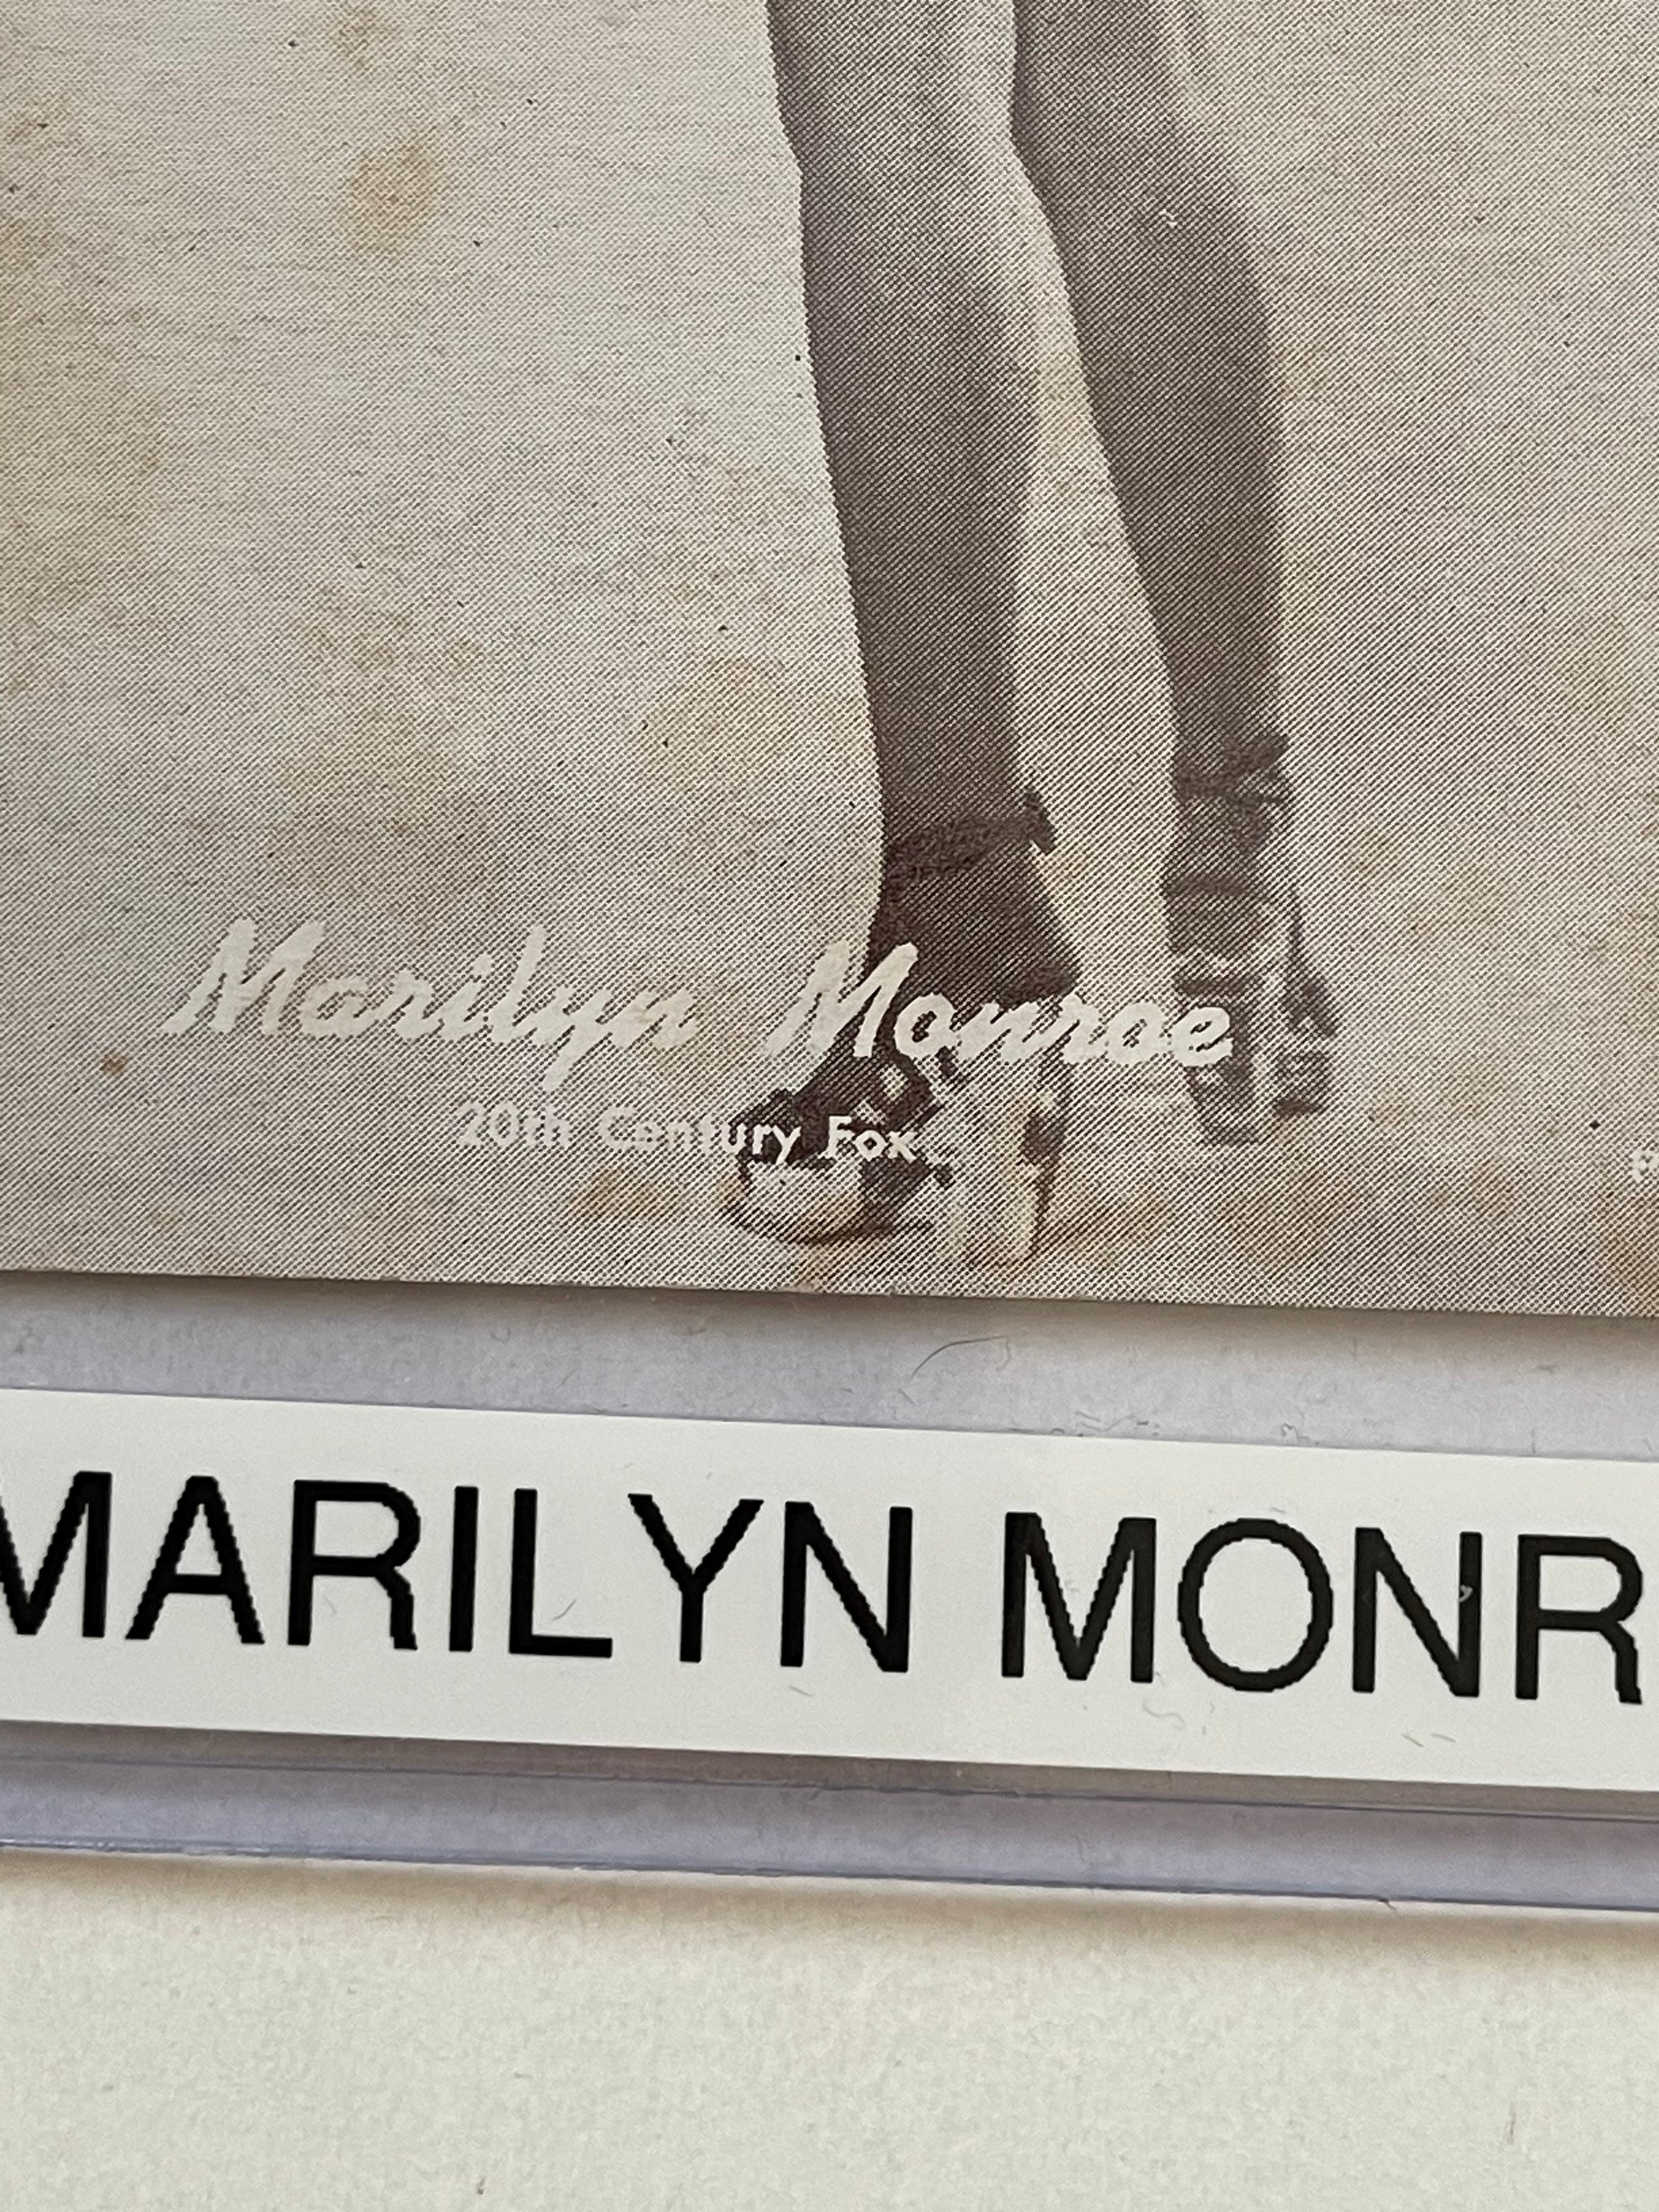 Marilyn Monroe original rare movie Exhibit card 1962